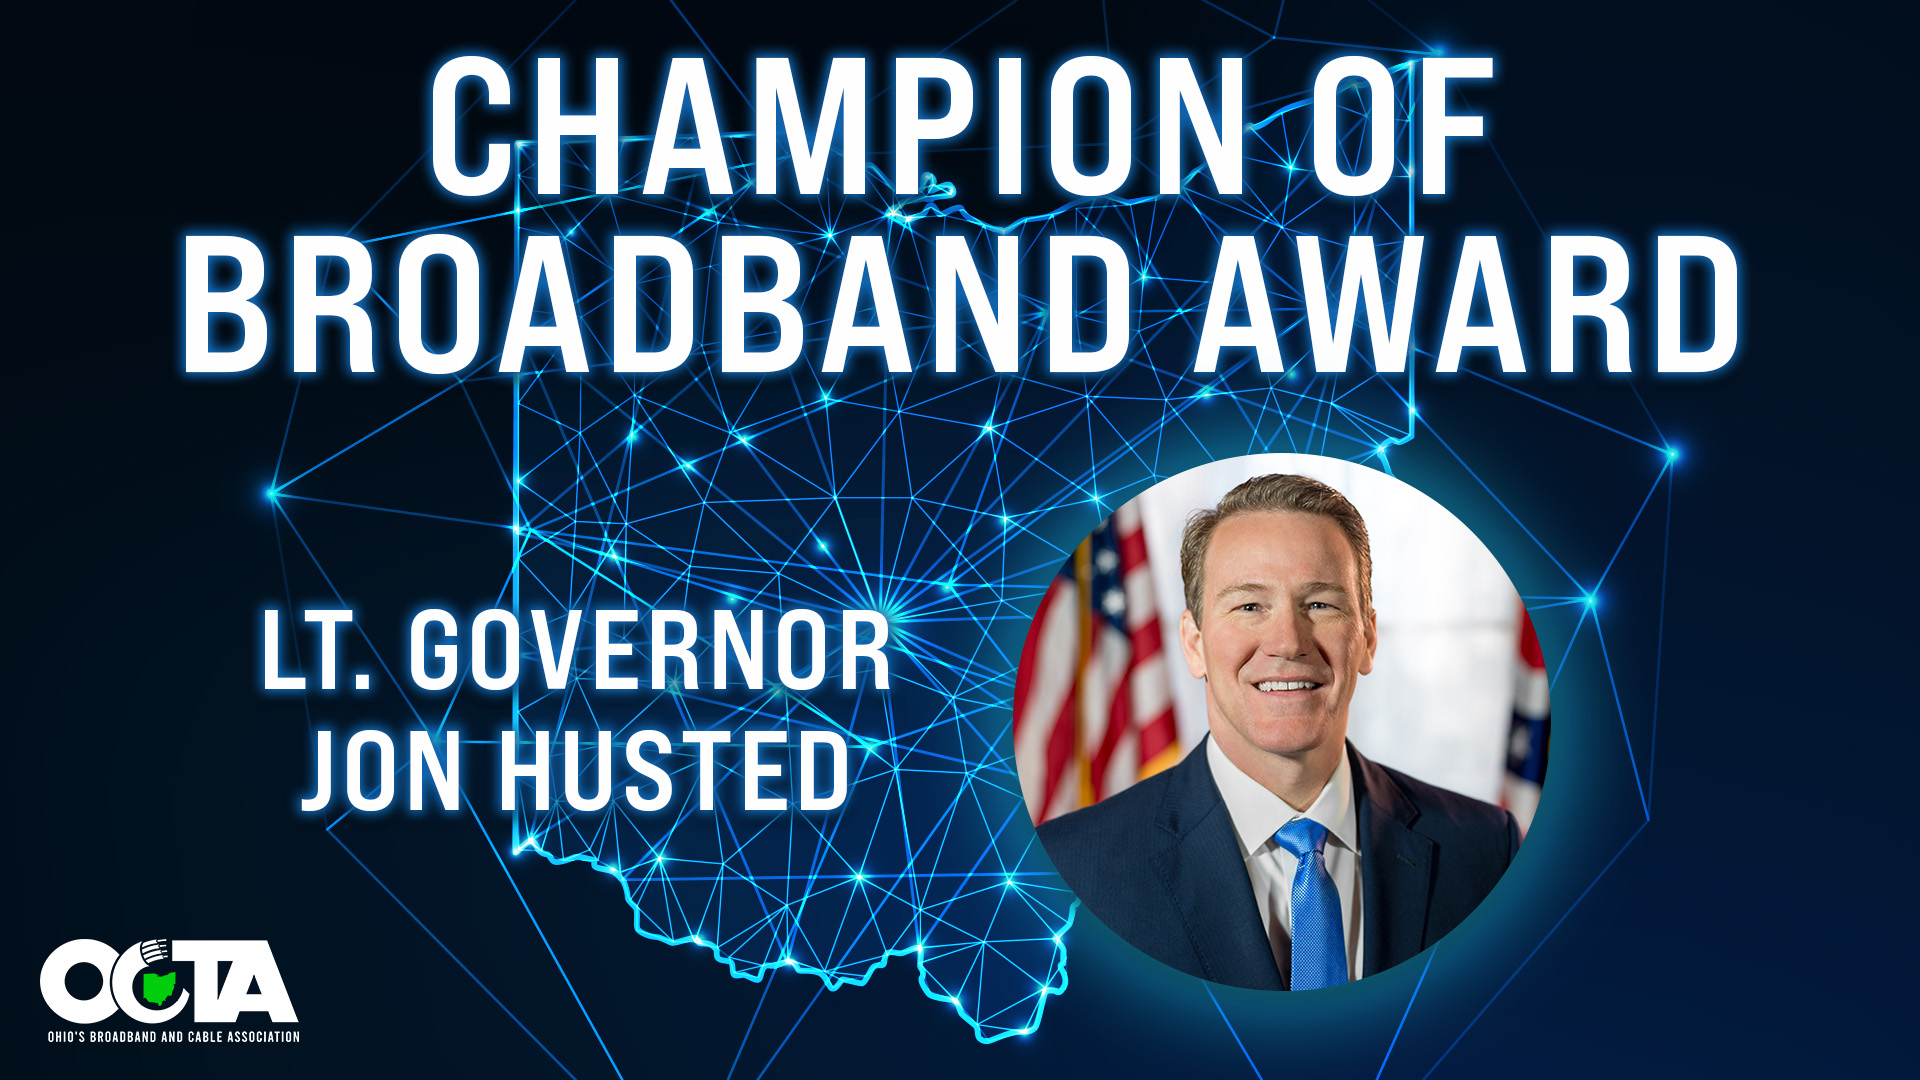 OCTA Presents Lt. Governor Jon Husted with Inaugural Champion of Broadband Award 